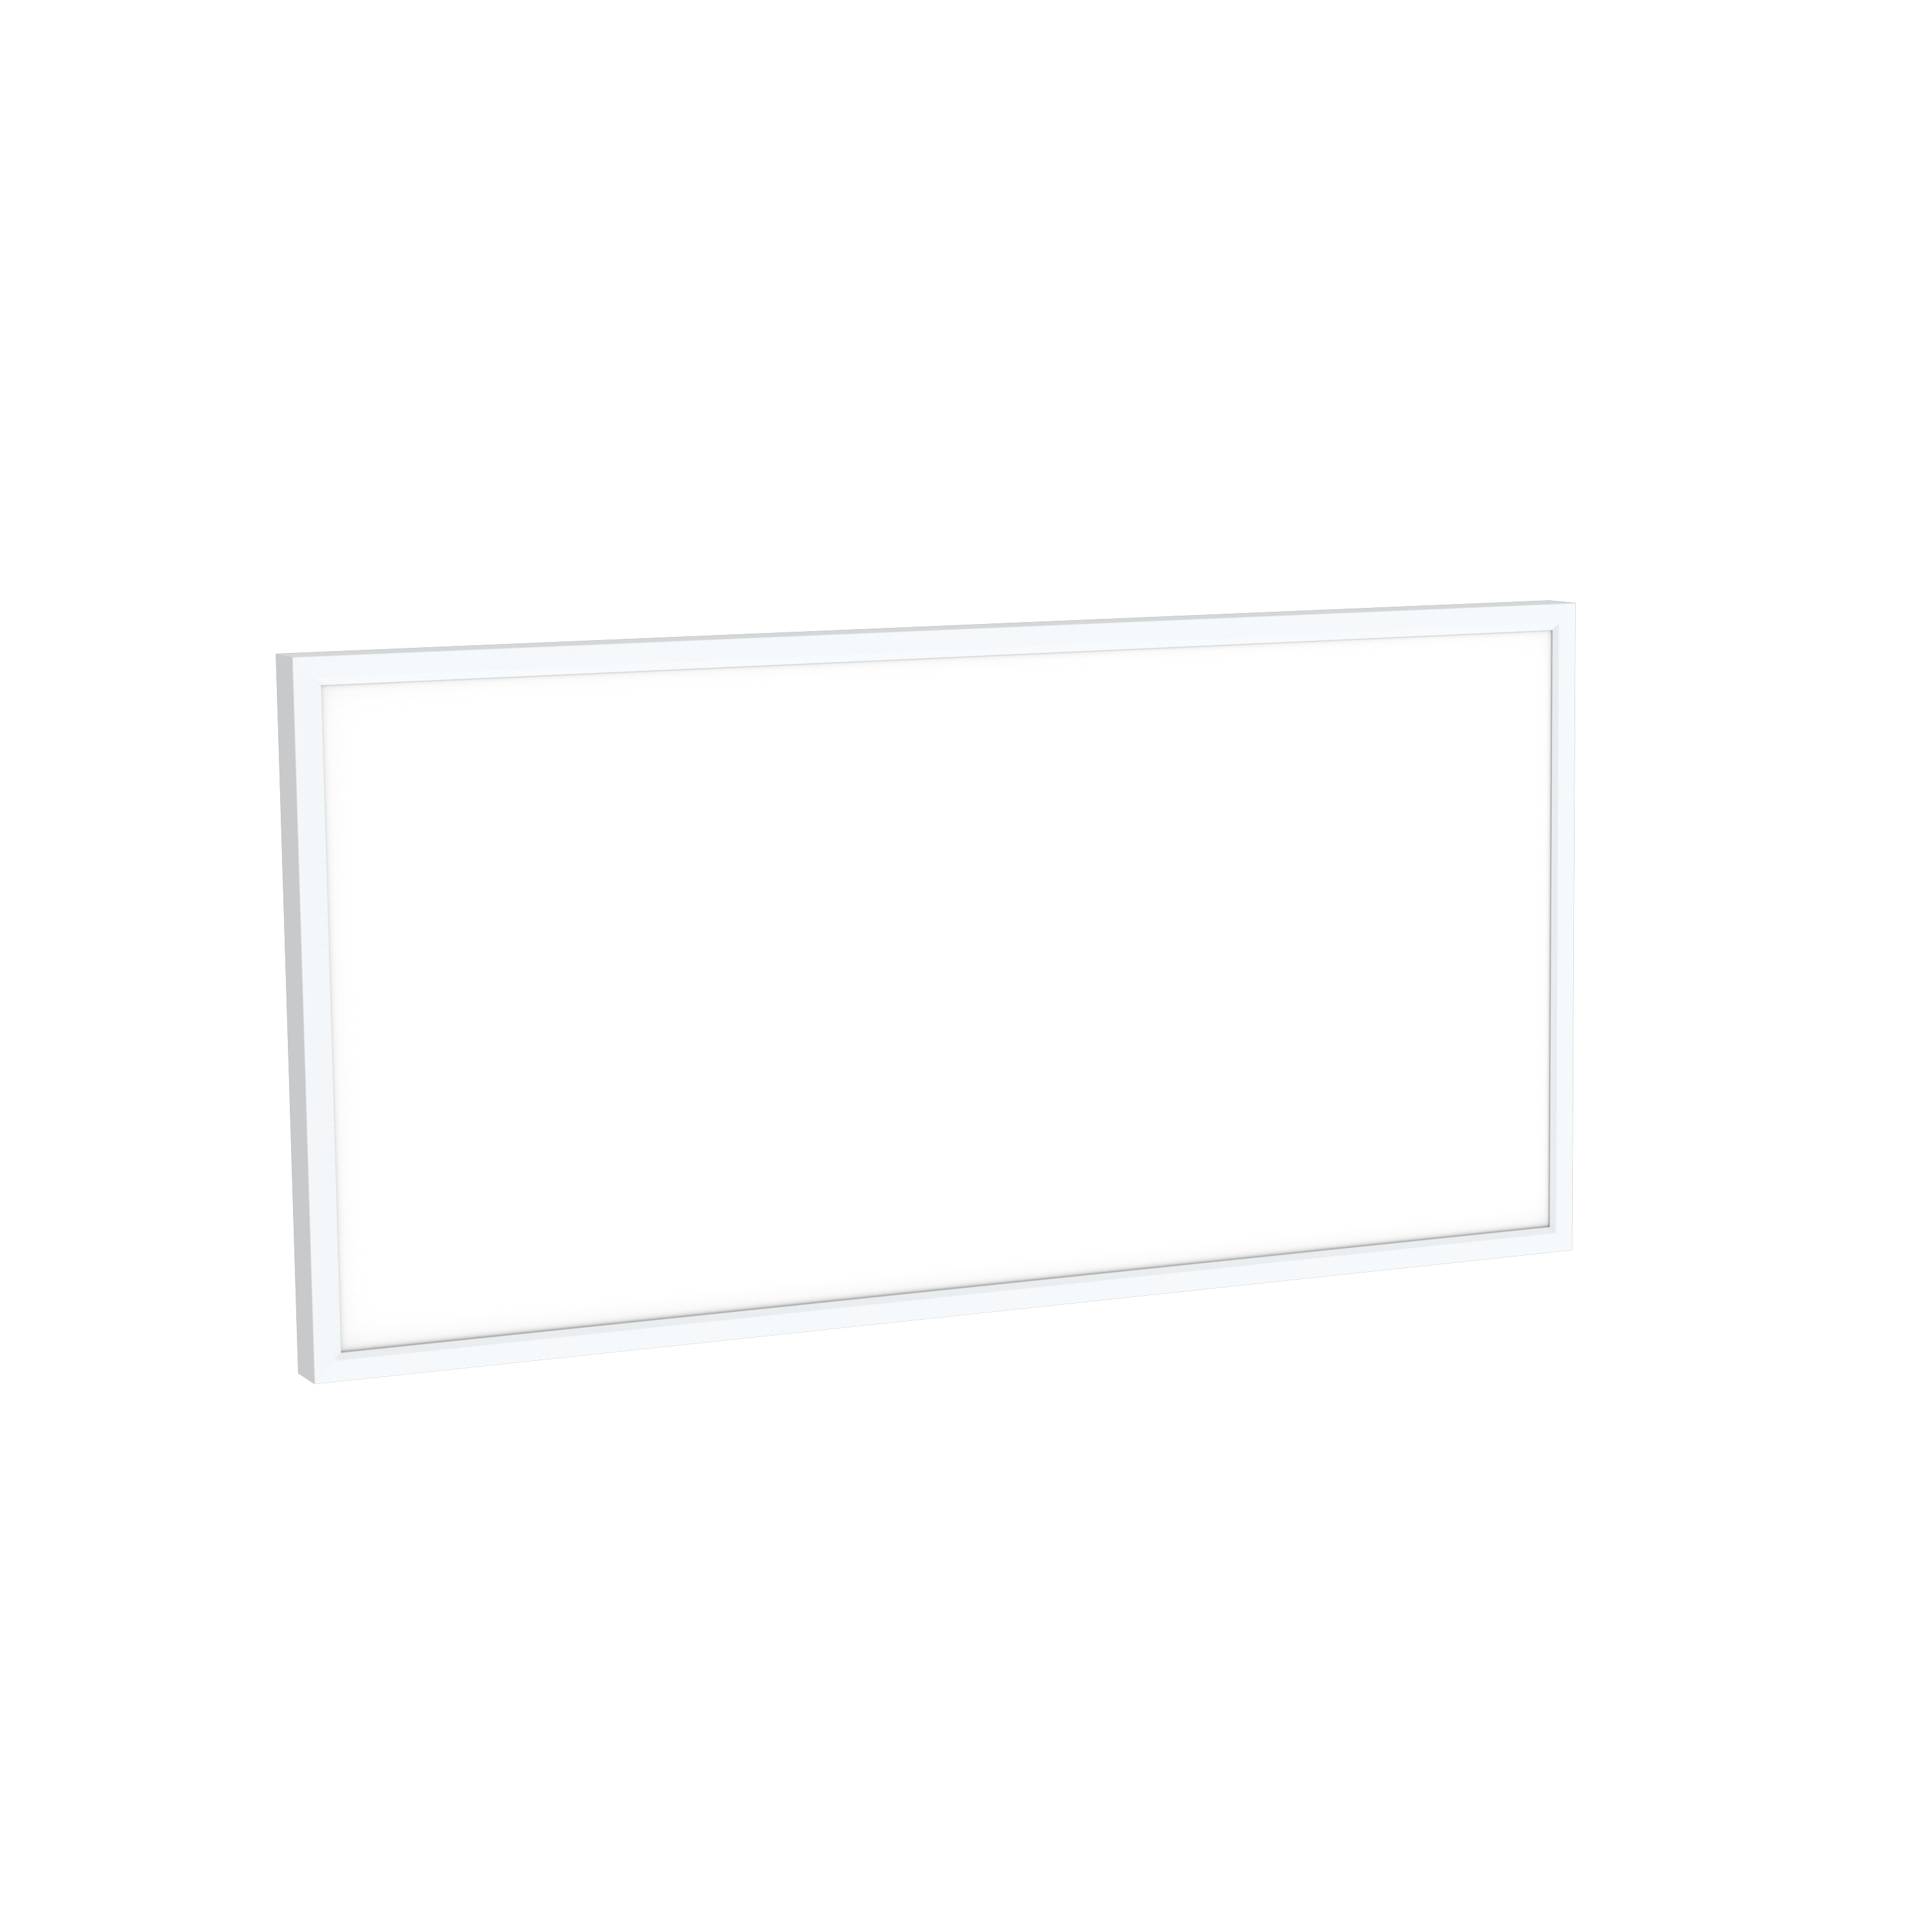 Panel led inspire gdansk 2000lm intensidad y color de luz regulable 30x60 cm